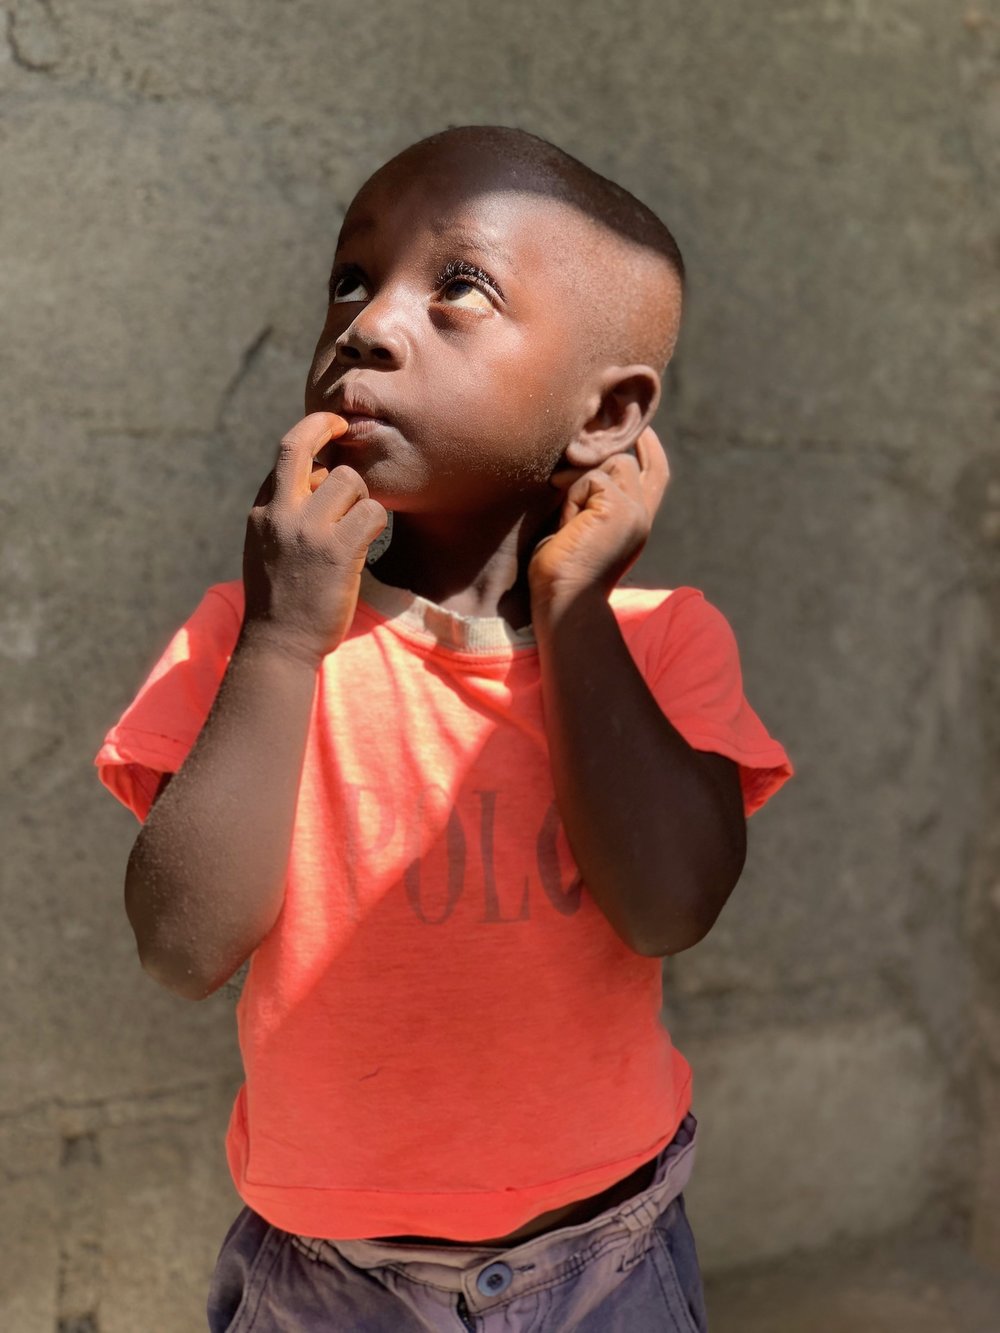 Haitian boy looking up